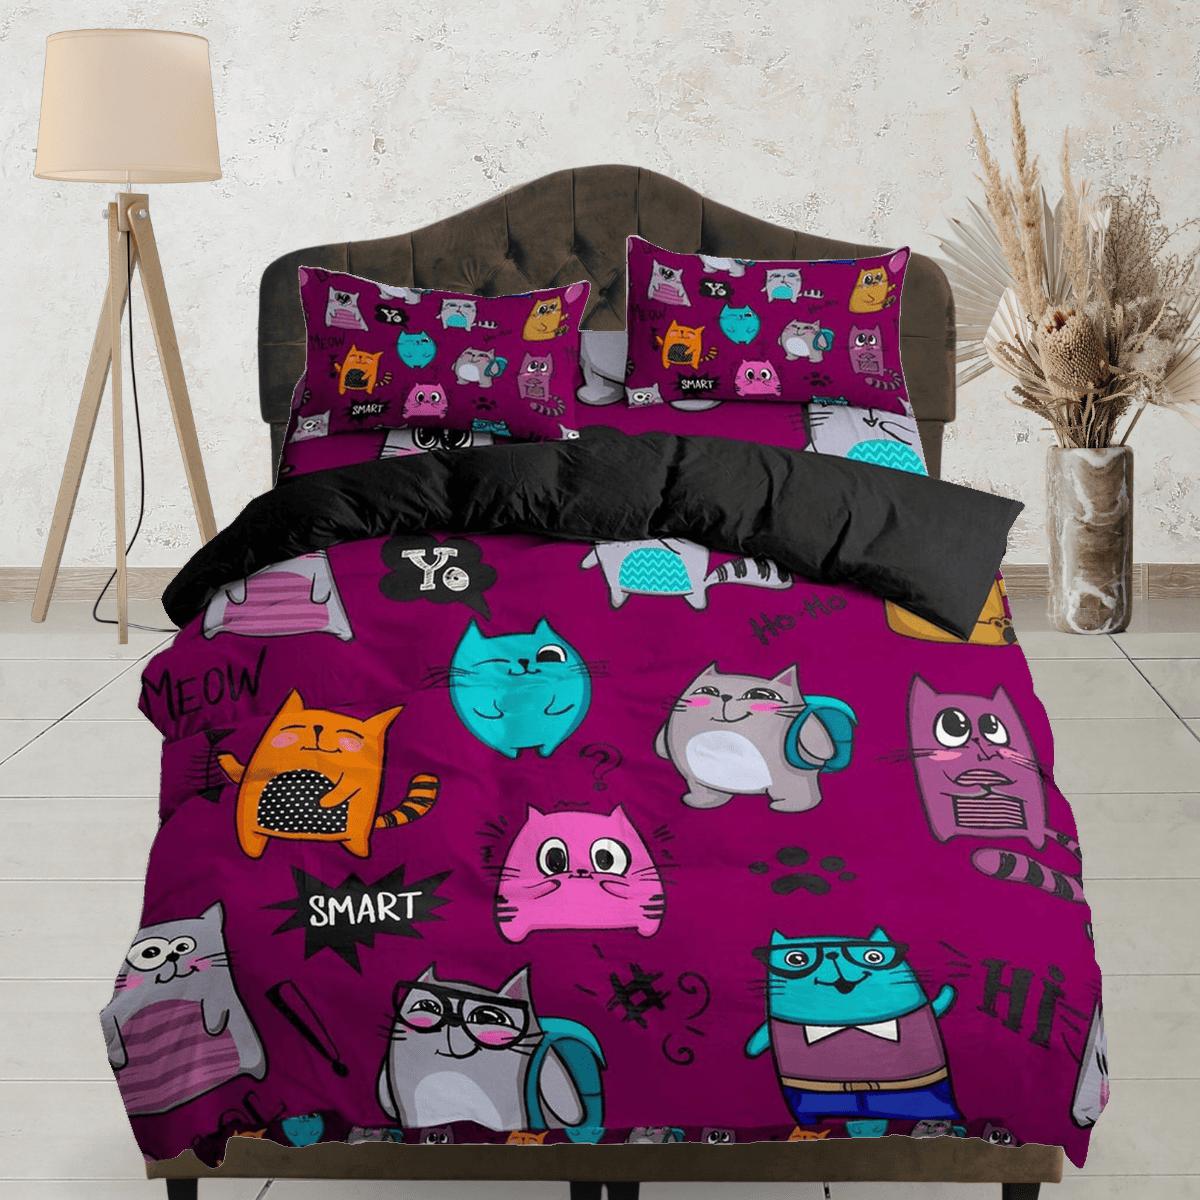 daintyduvet Colorful cute cat bedding violet, toddler bedding, kids duvet cover set, gift for cat lovers, baby bedding, baby shower gift